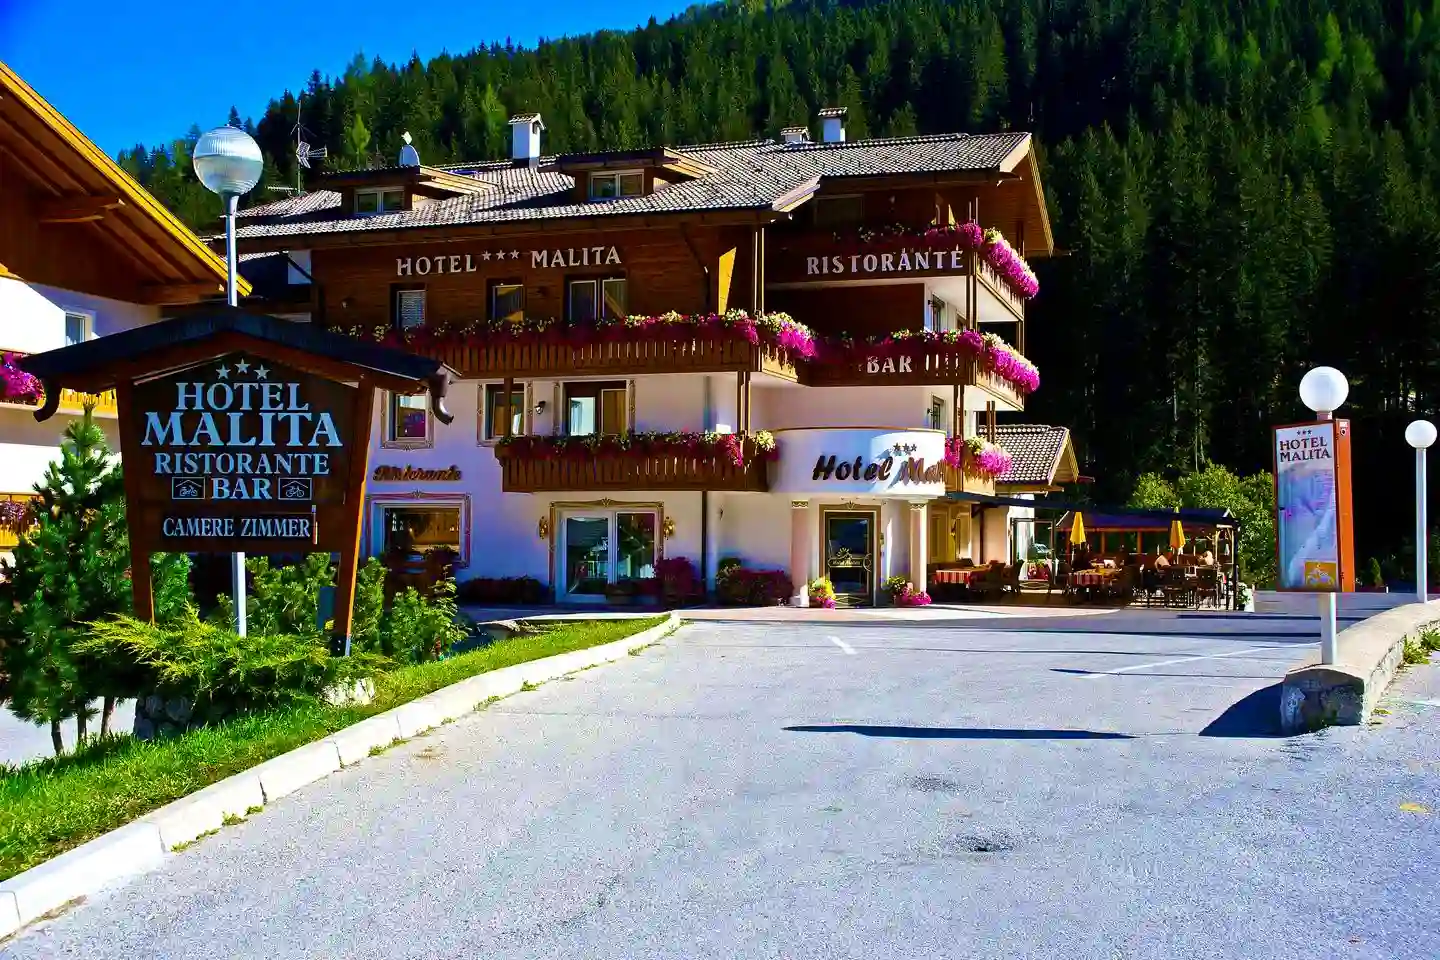 Hotel Malita, Arabba resort, Italy